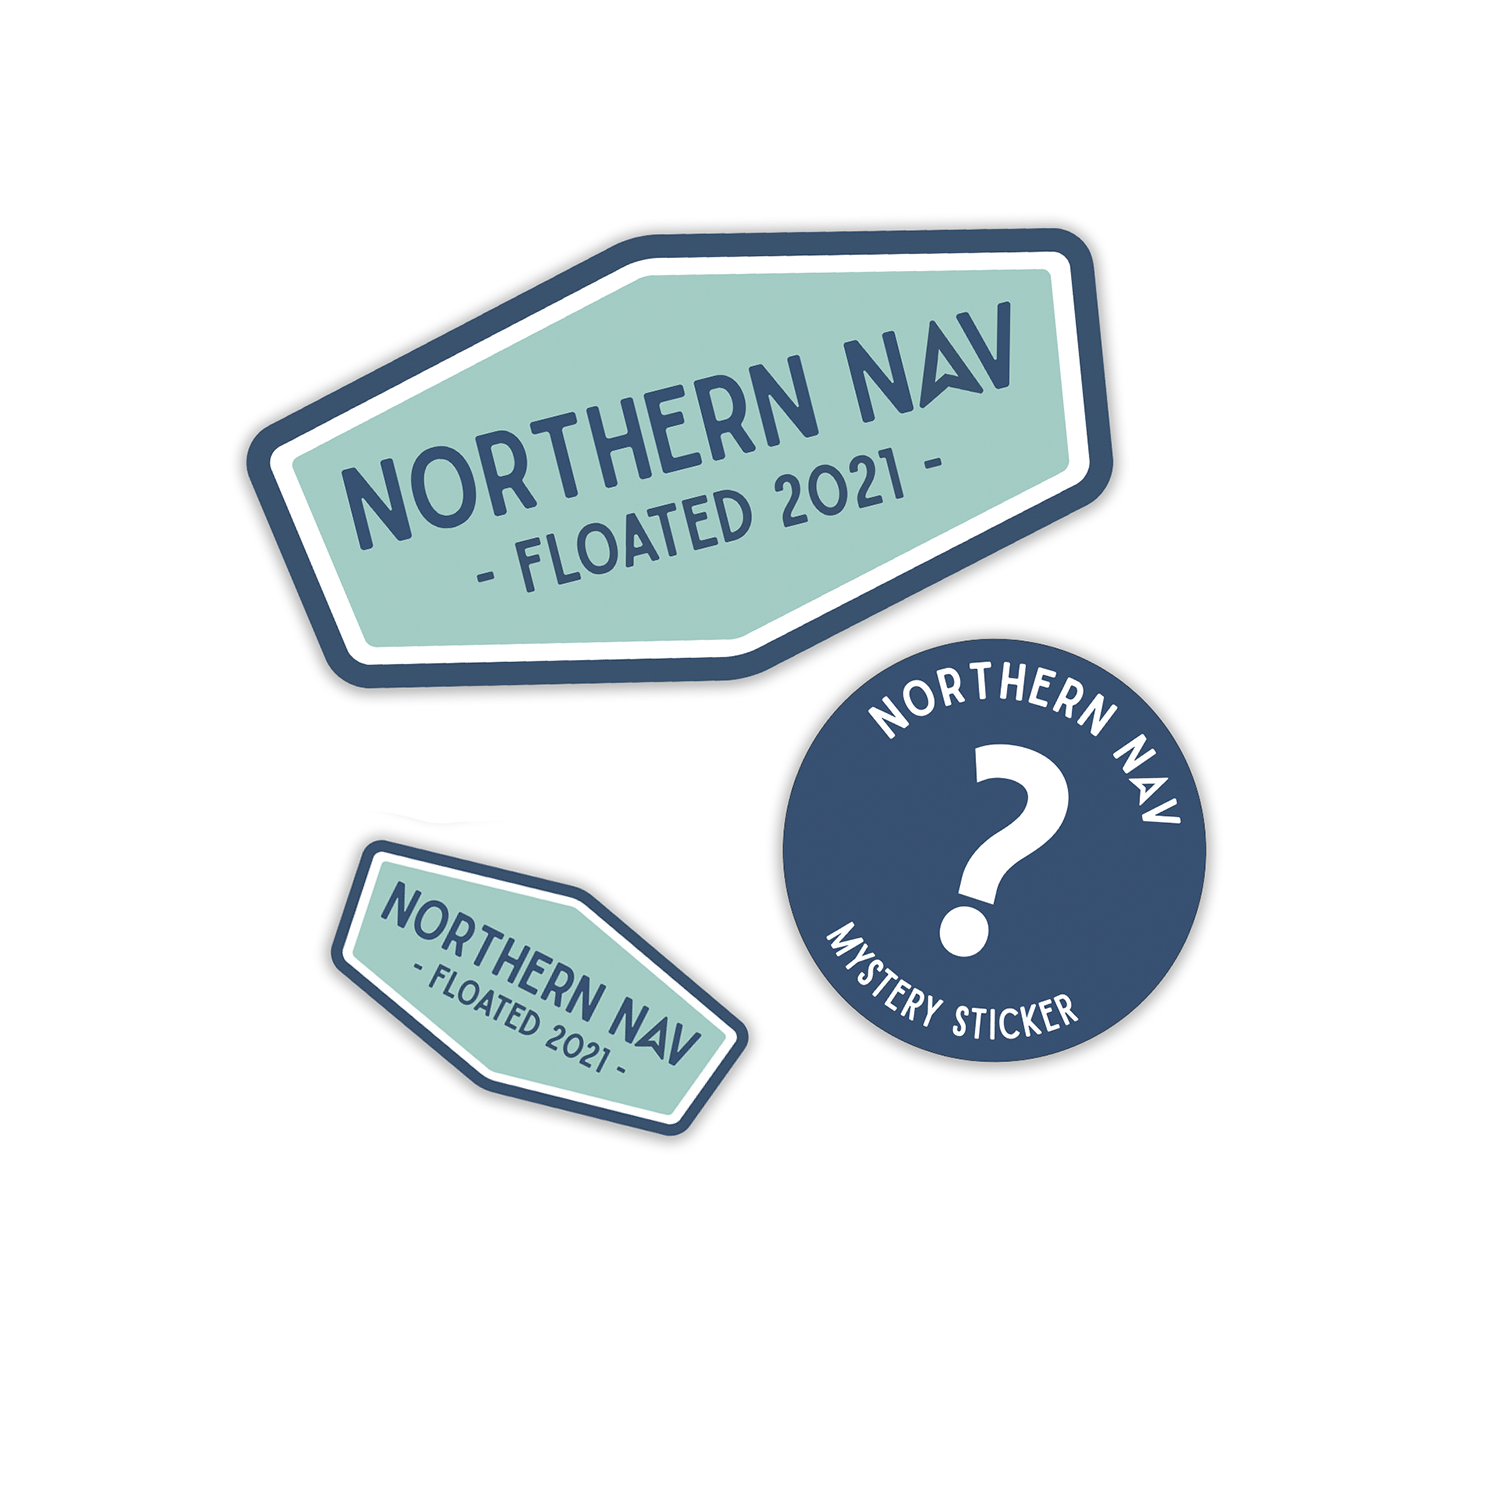 Free Northern Nav Stickers